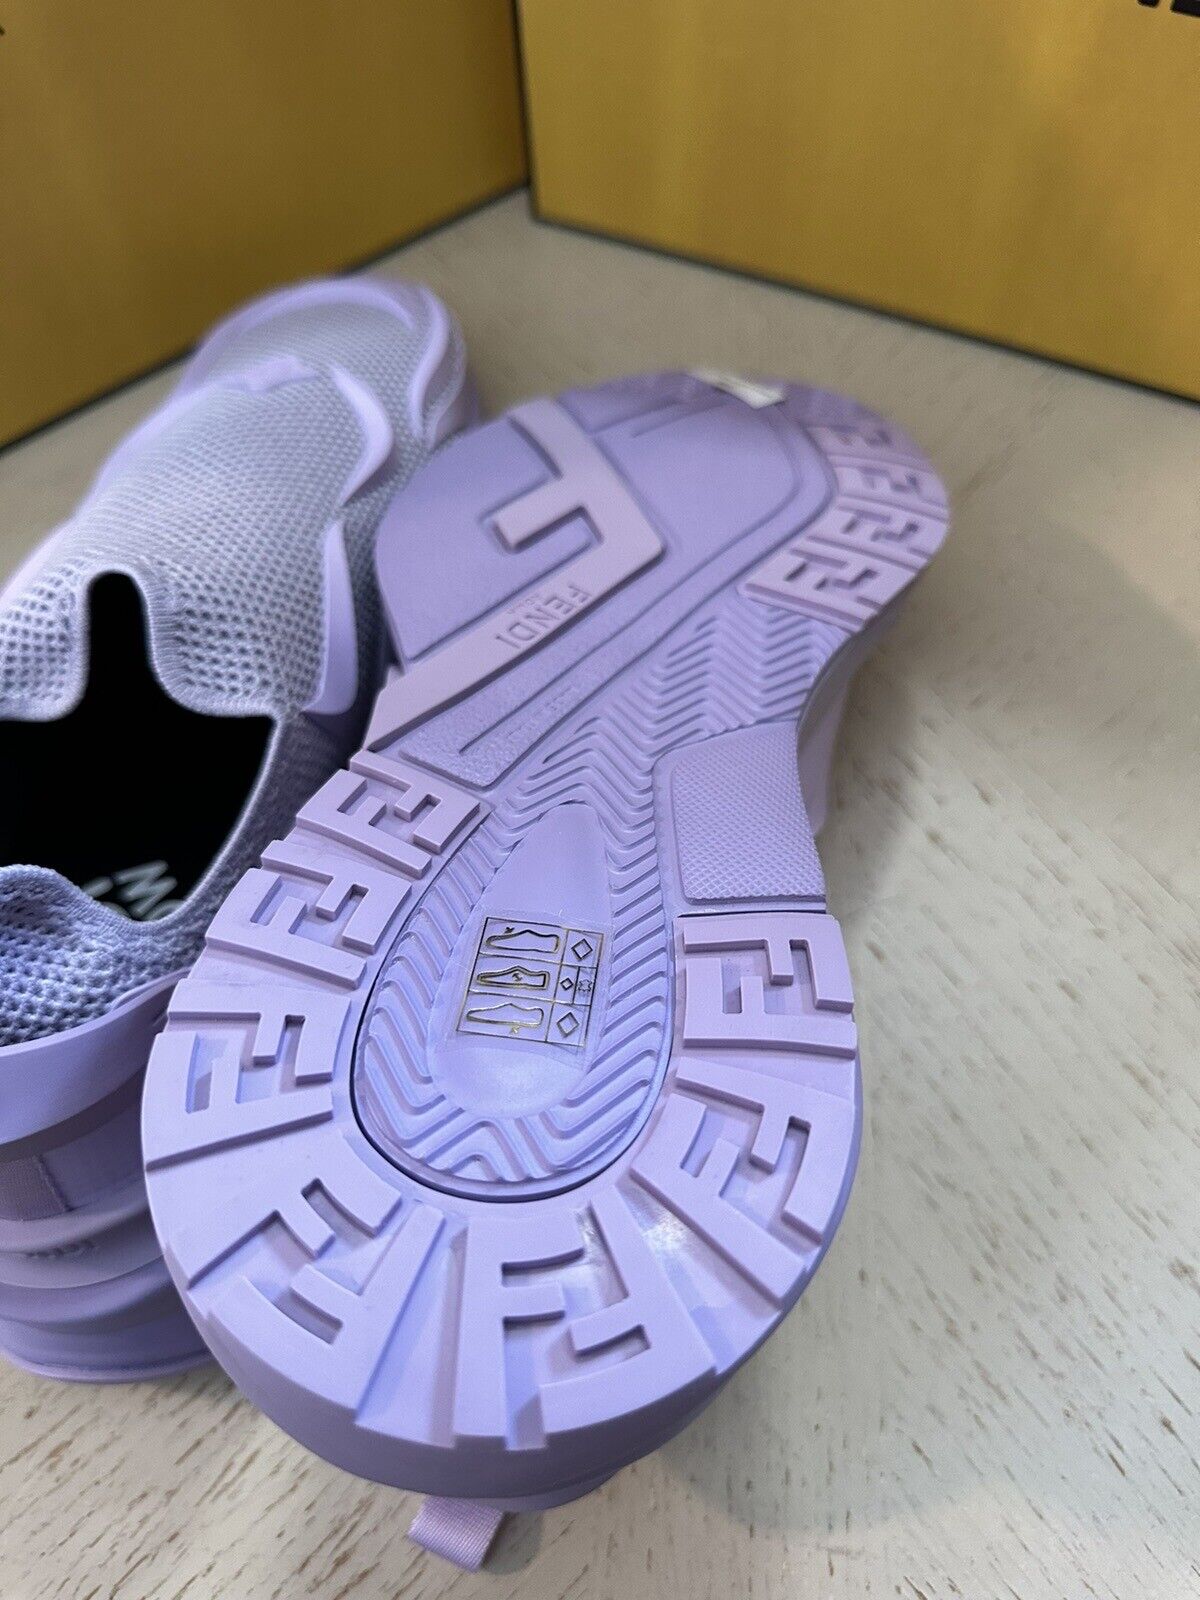 NIB $1050 Fendi Men  Flow Knit Low Top Sneakers Lilac/Purple 13 US/12 UK 7E1504